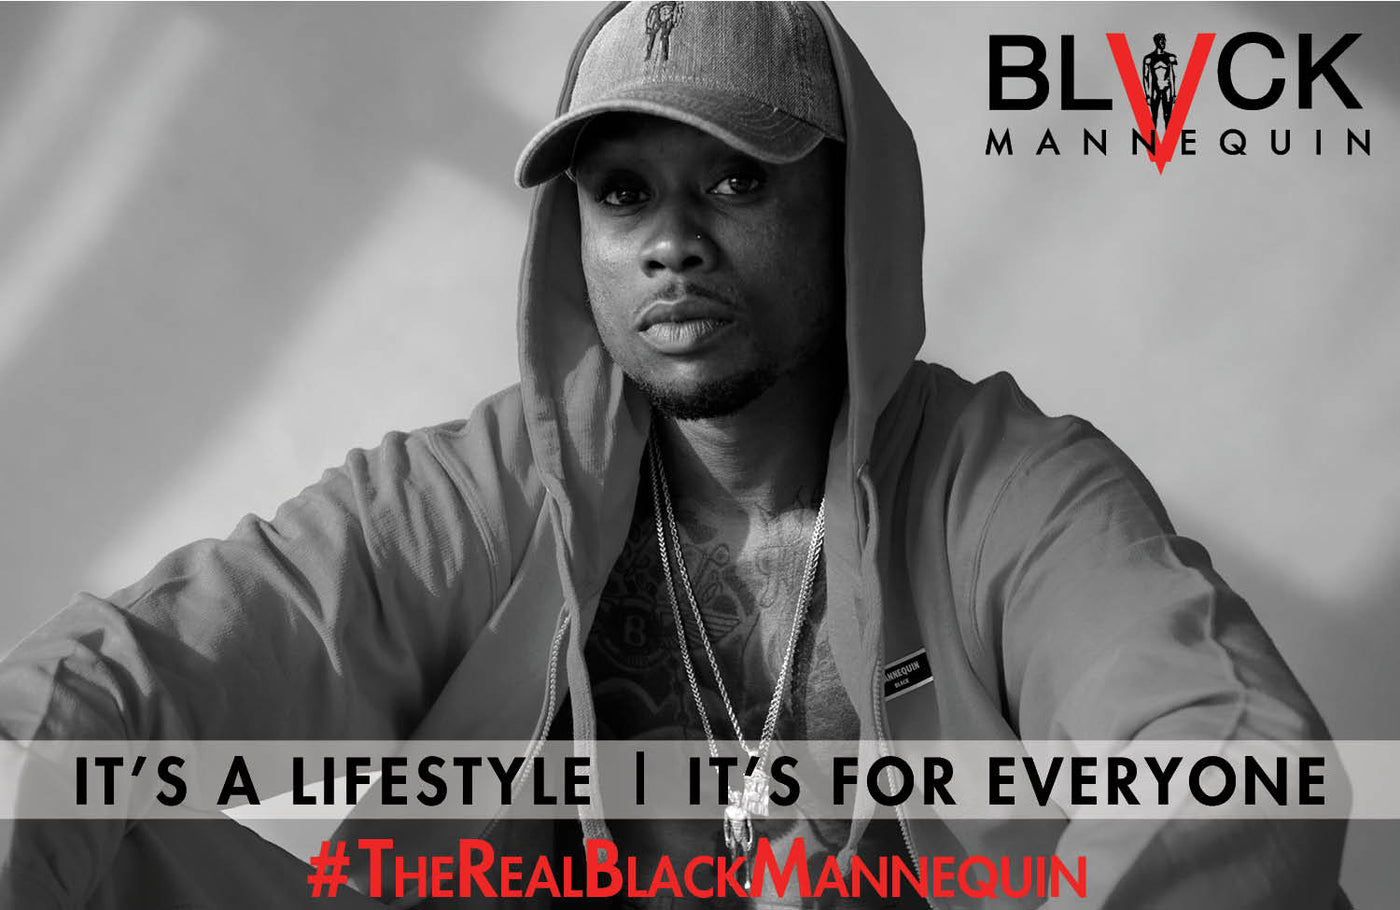 The Black Mannequin Official Website